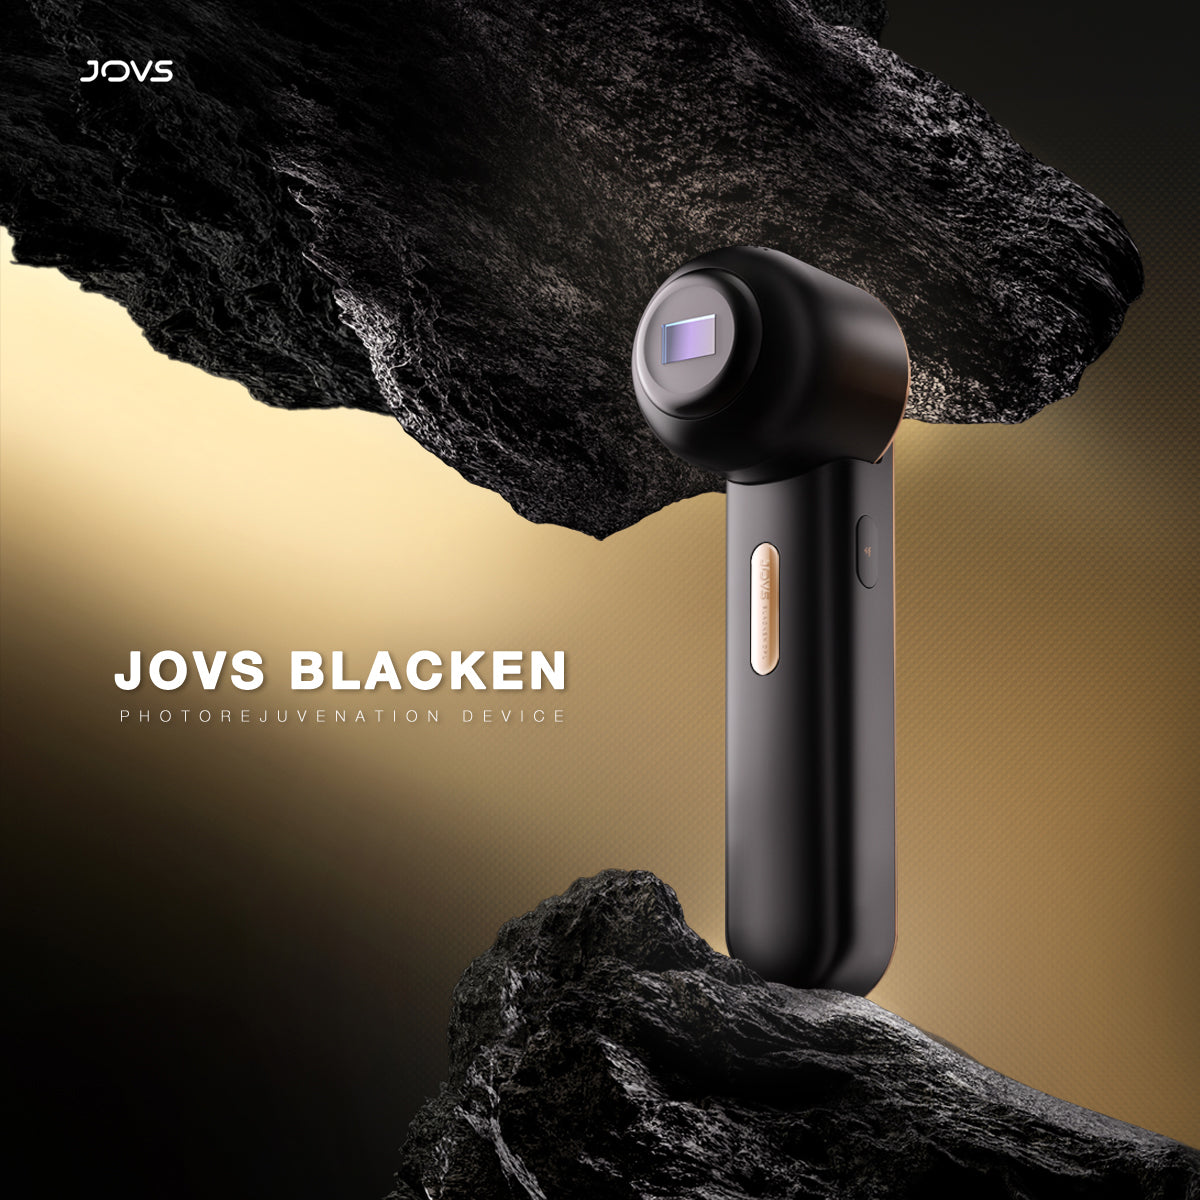 JOVS Blacken DPL Photorejuvenation skincare device displayed against a contrasting natural rock backdrop, highlighting its sleek design and cutting-edge skincare technology.